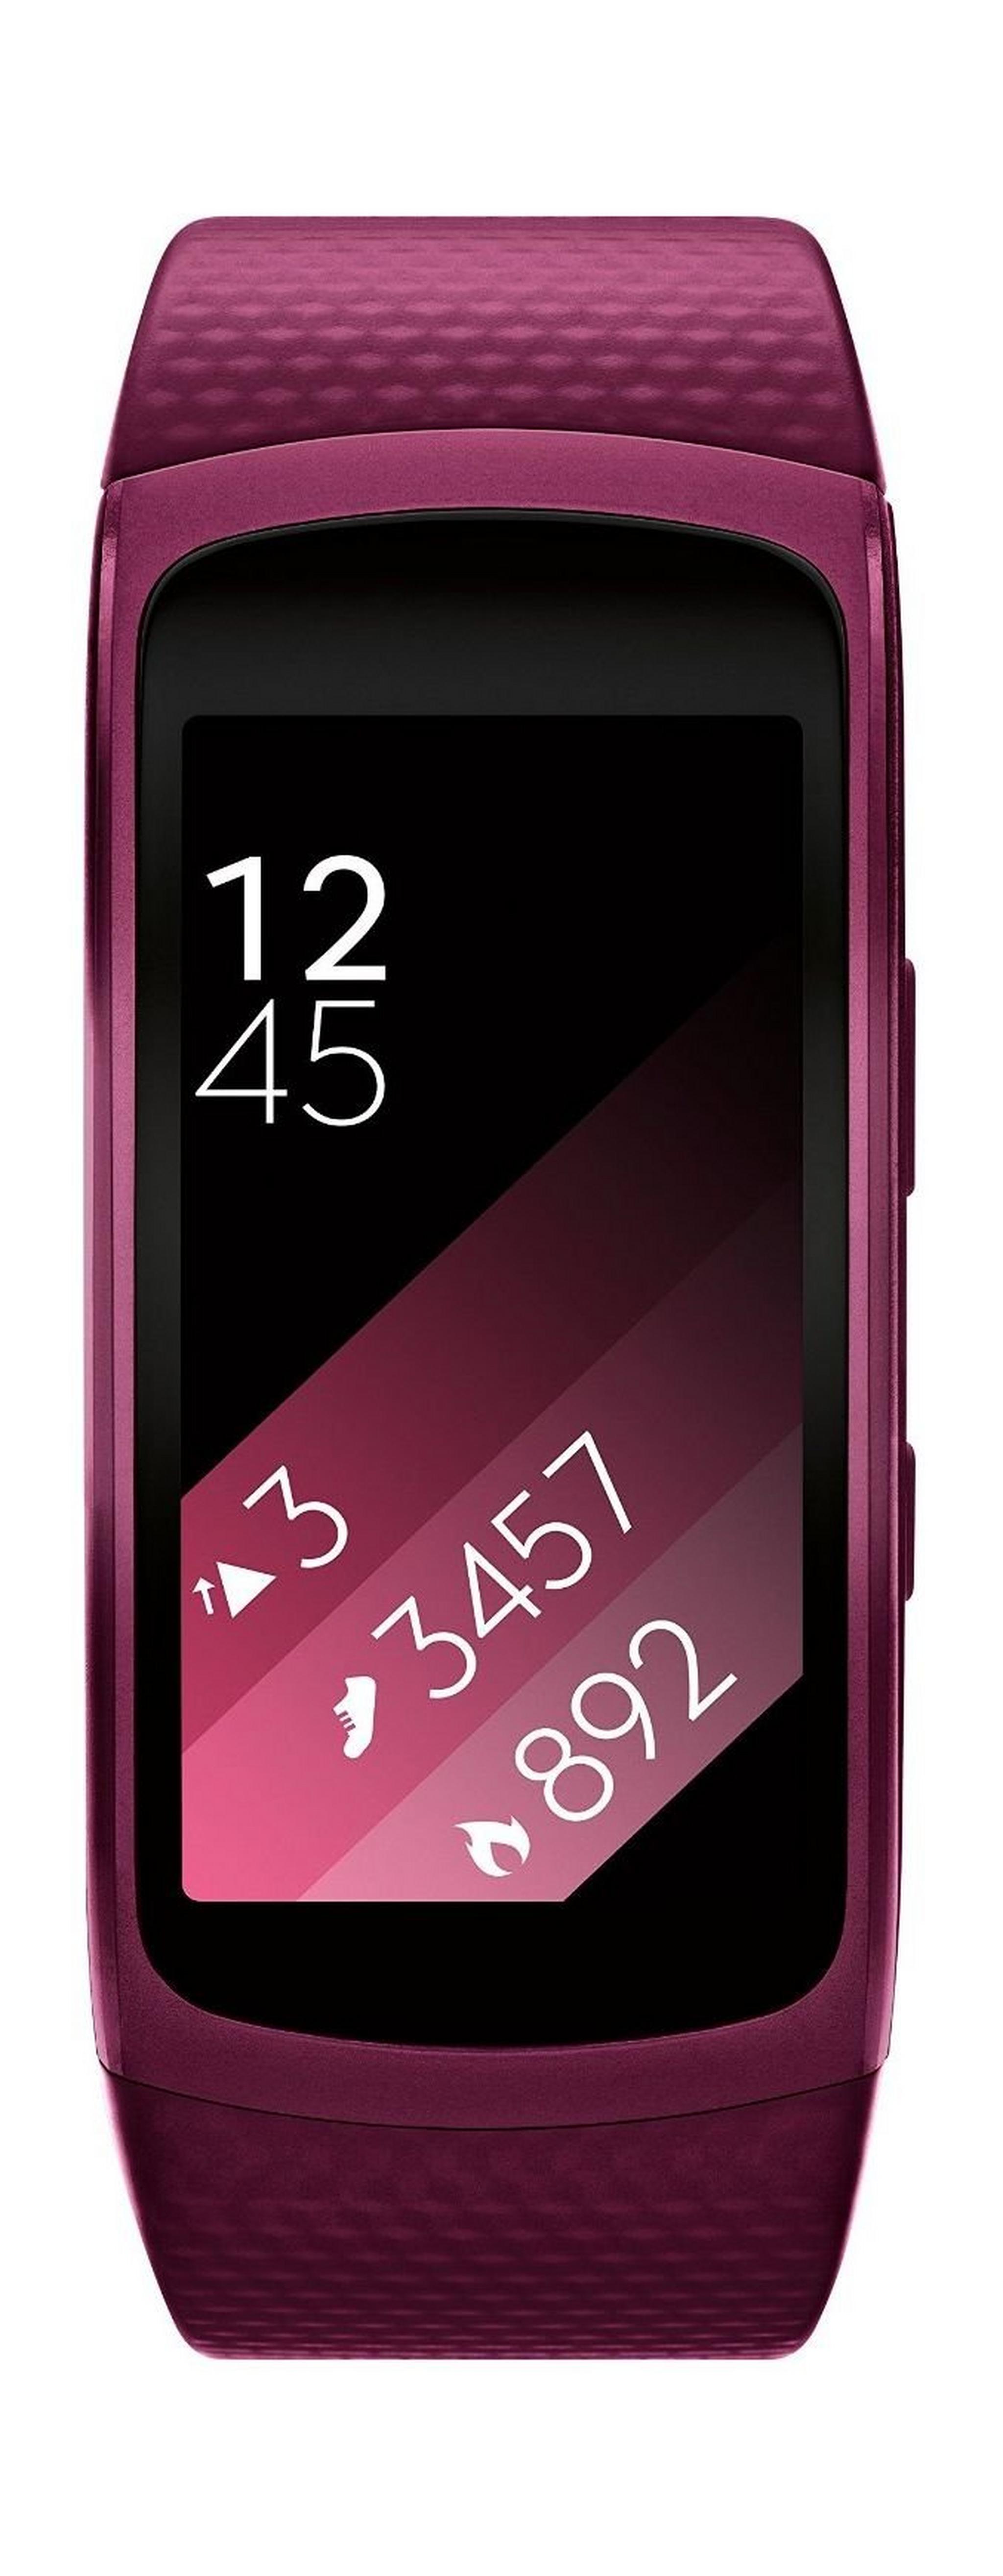 Samsung Gear Fit 2 Fitness Tracker (Small) – Pink